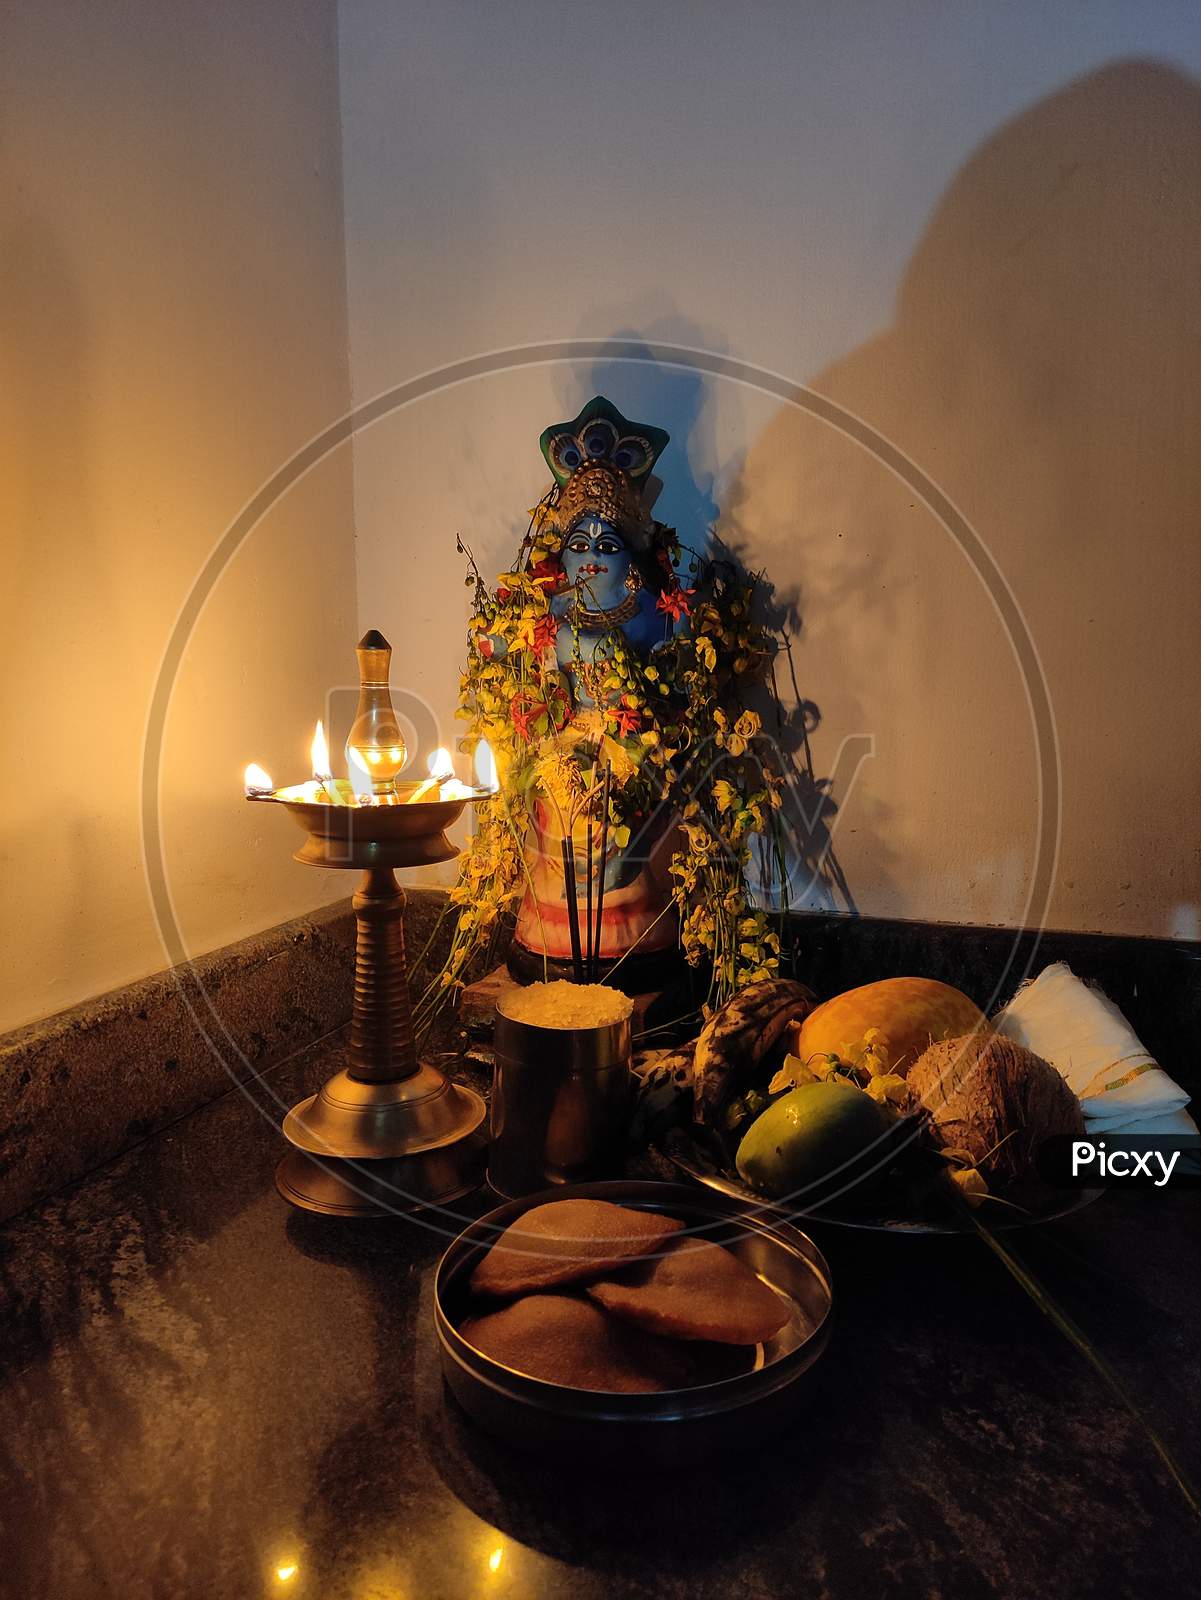 A traditional Vishu kani setting with auspicious items